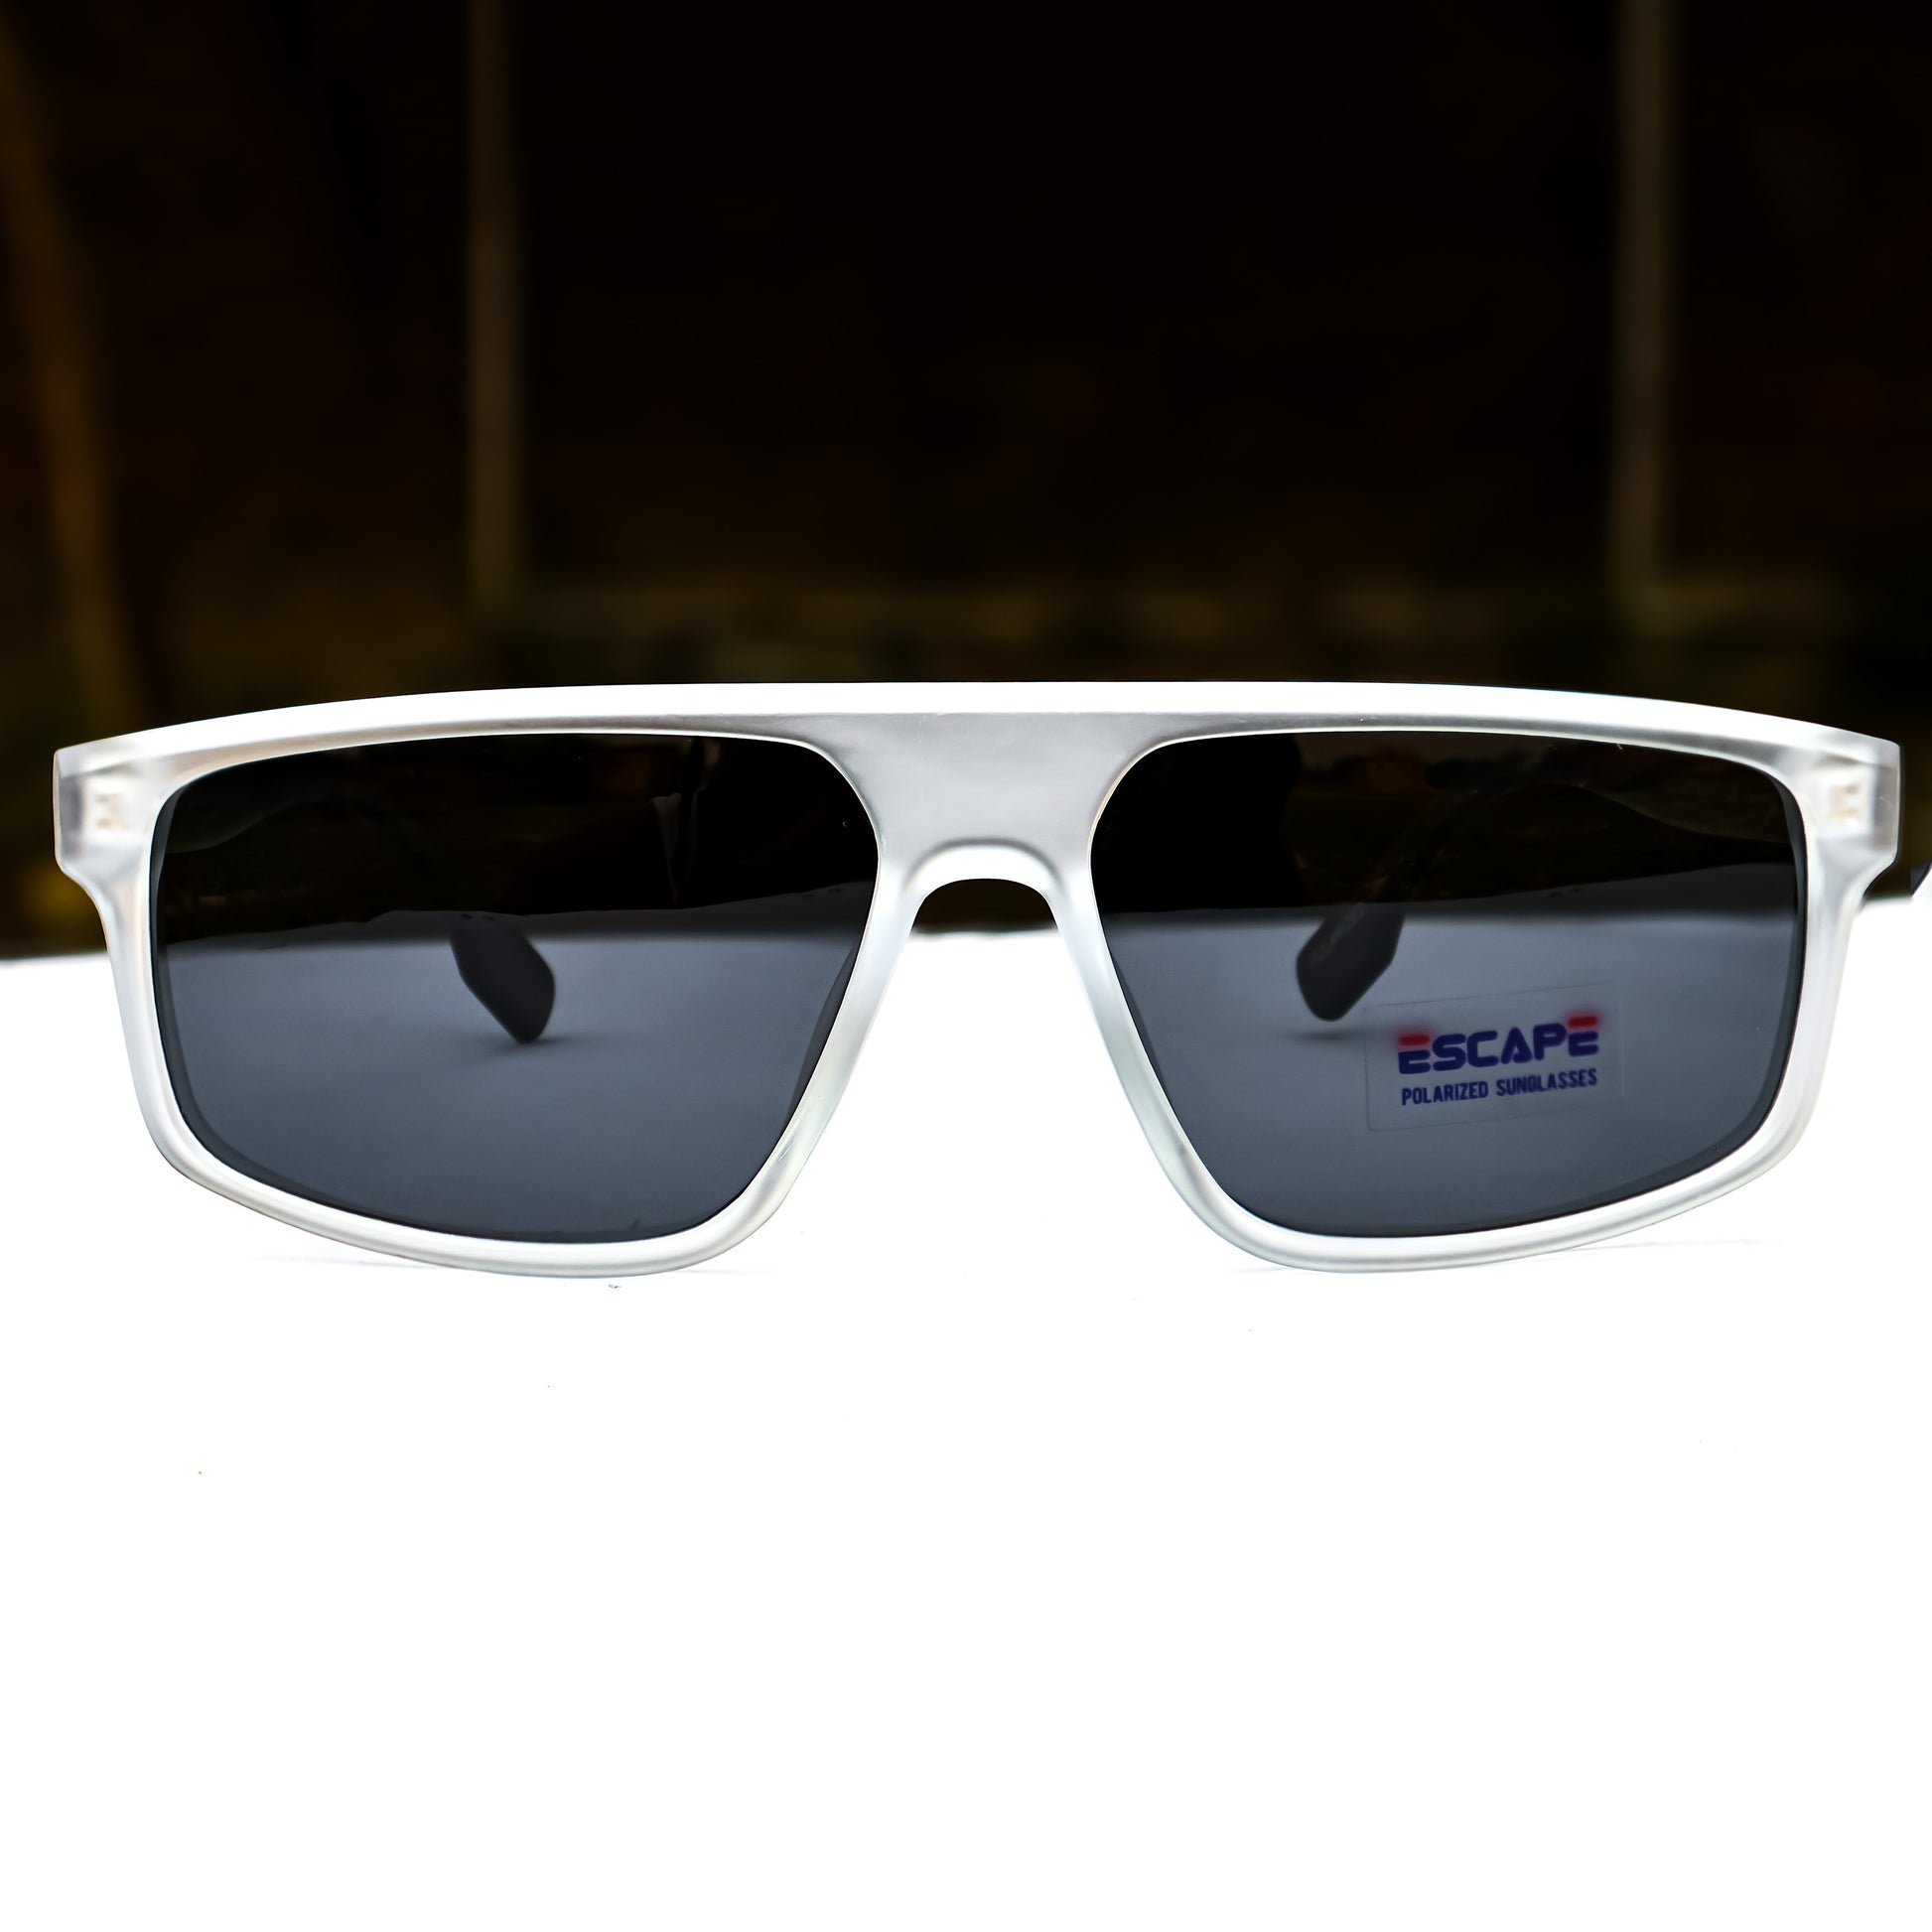 Jiebo Black Polarized Sunglasses For Man